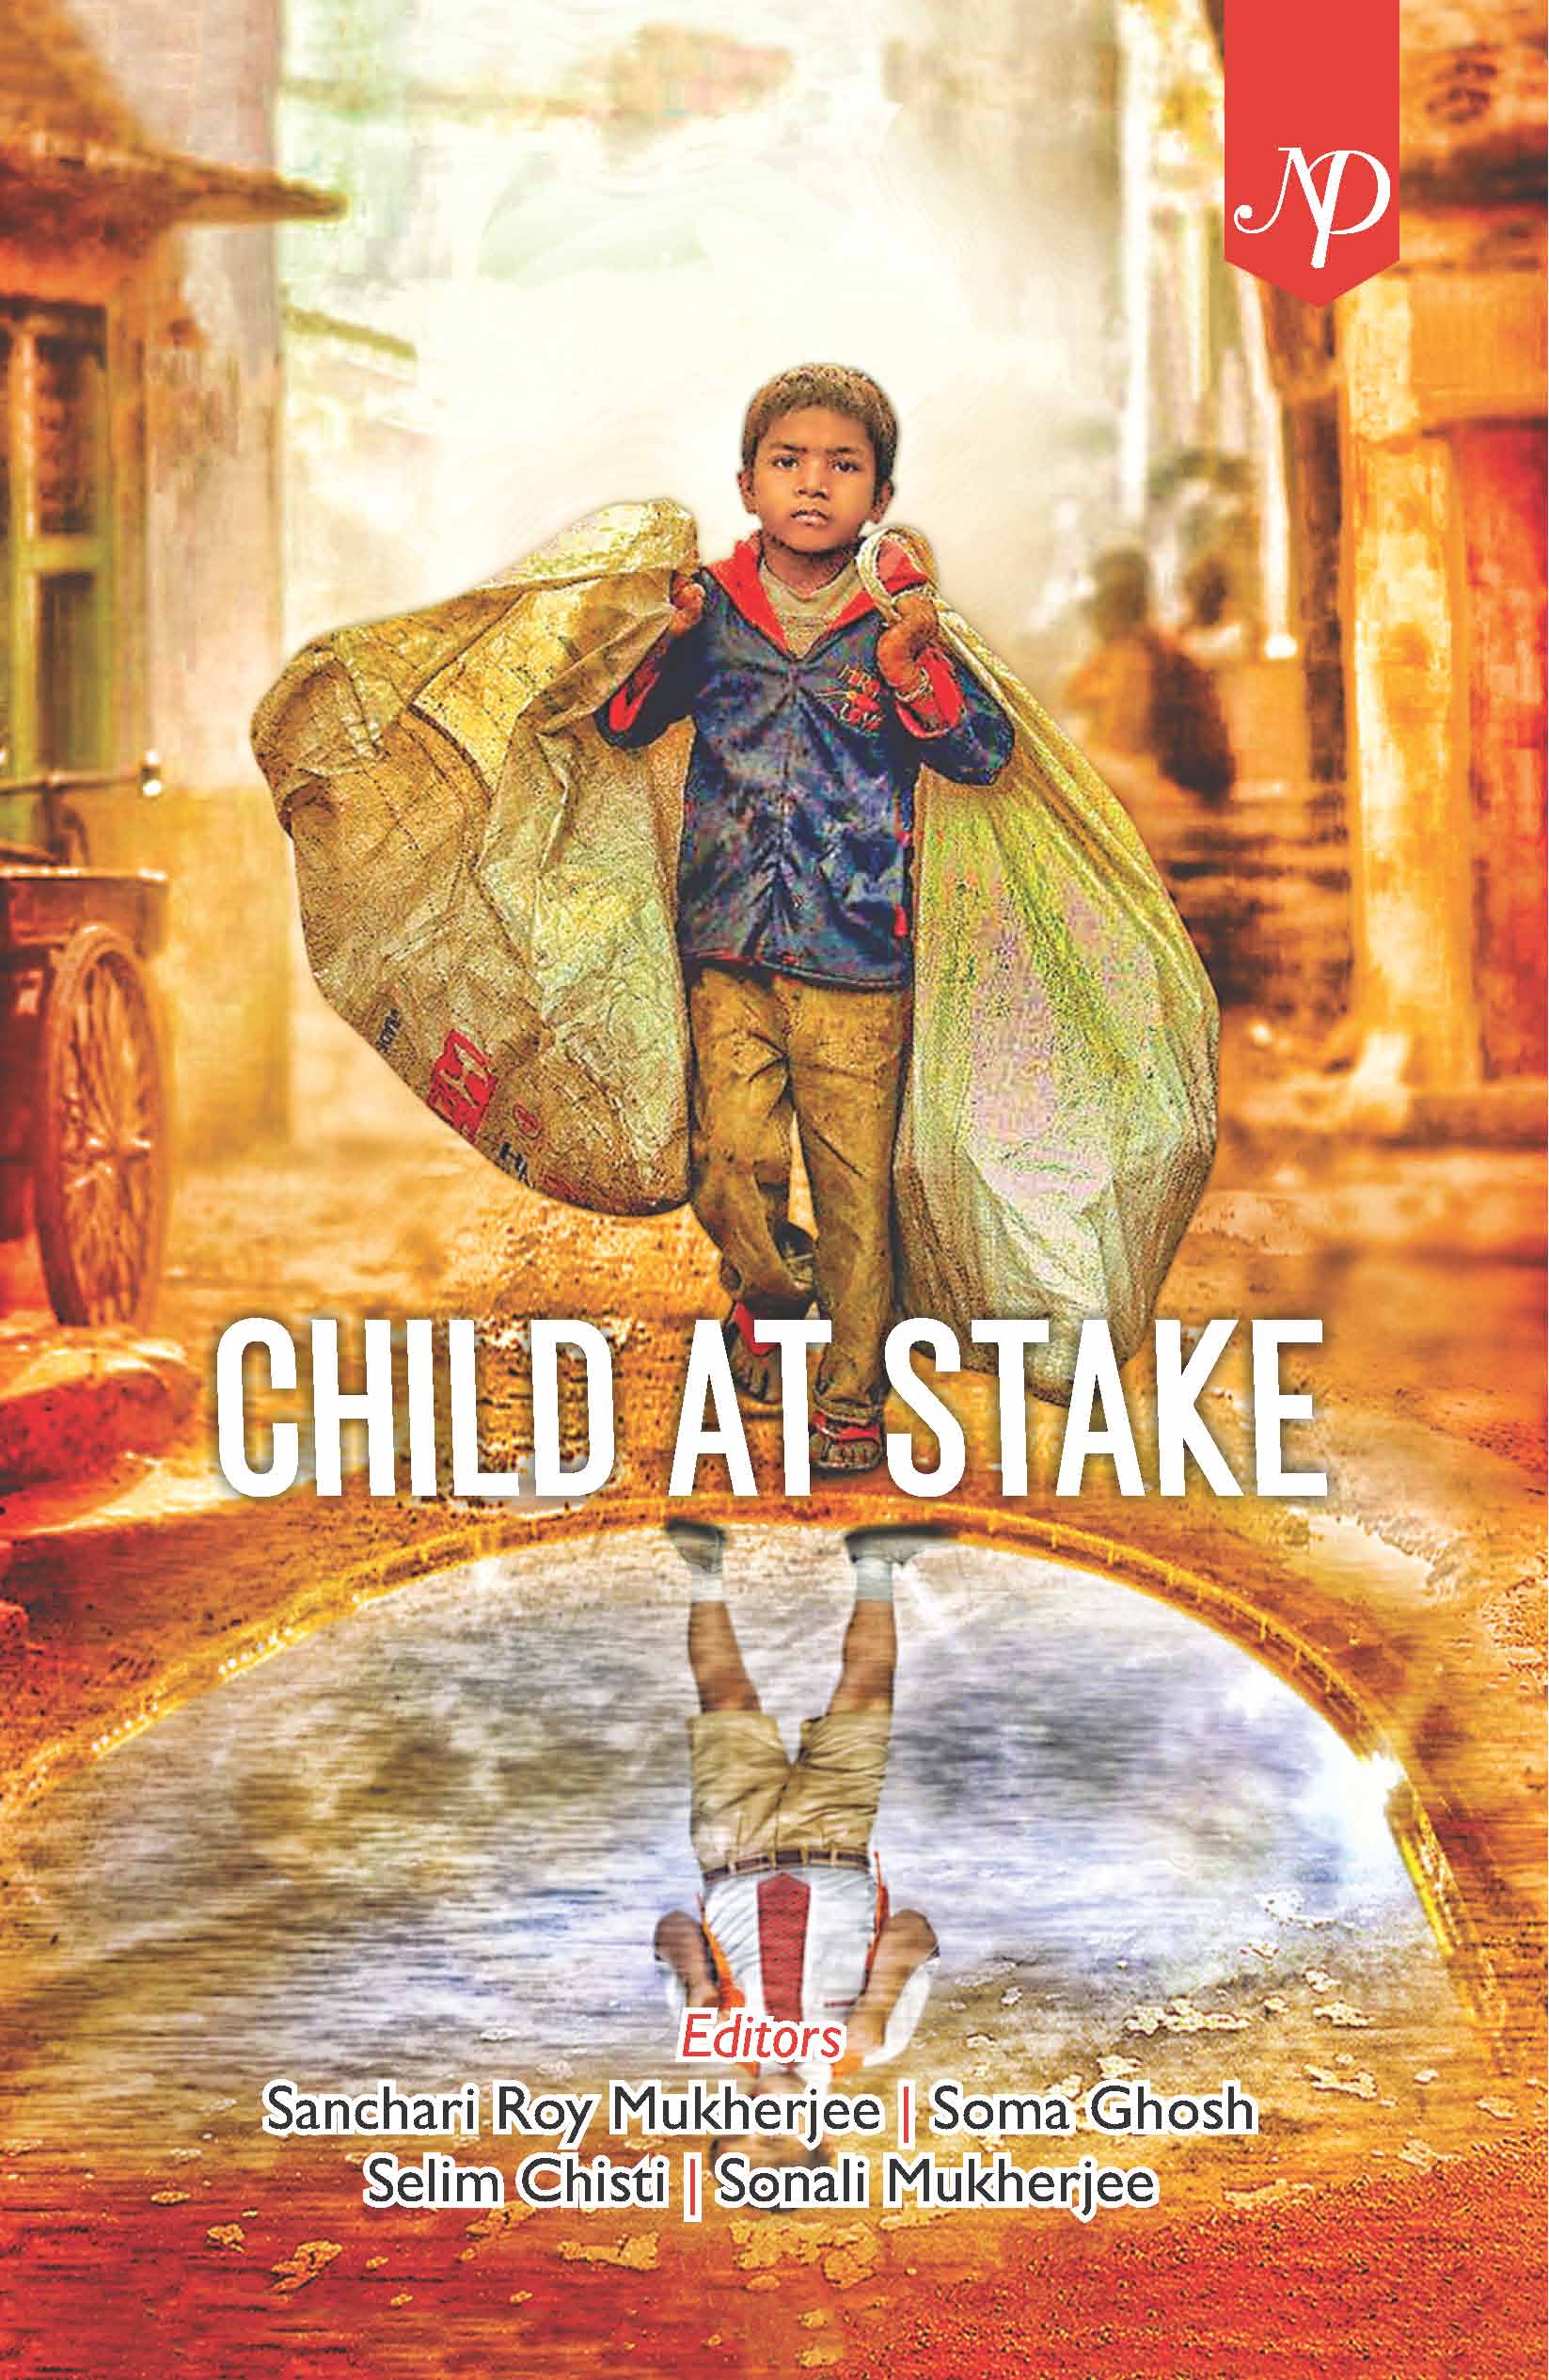 Child at Stake by Sonali Mukherjee Cover.jpg